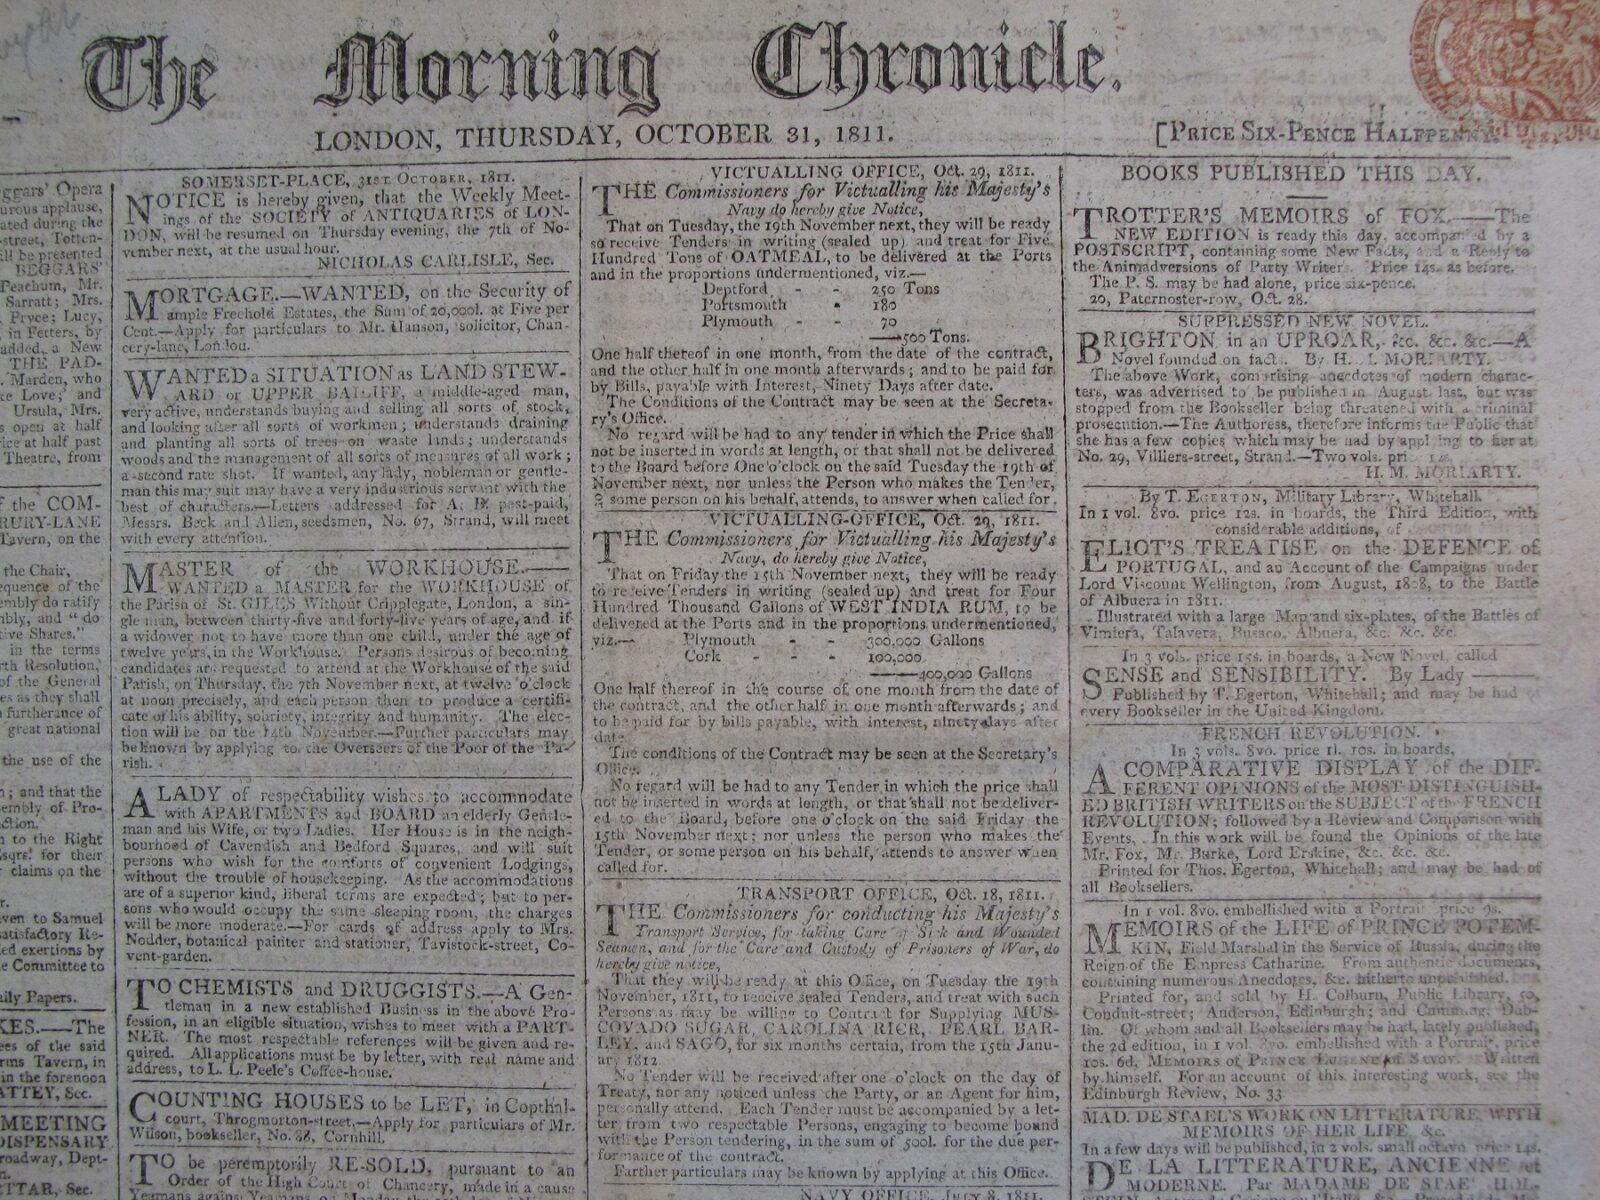 Newspaper, The Morning Chronicle, London Thursday October 31st 1811.